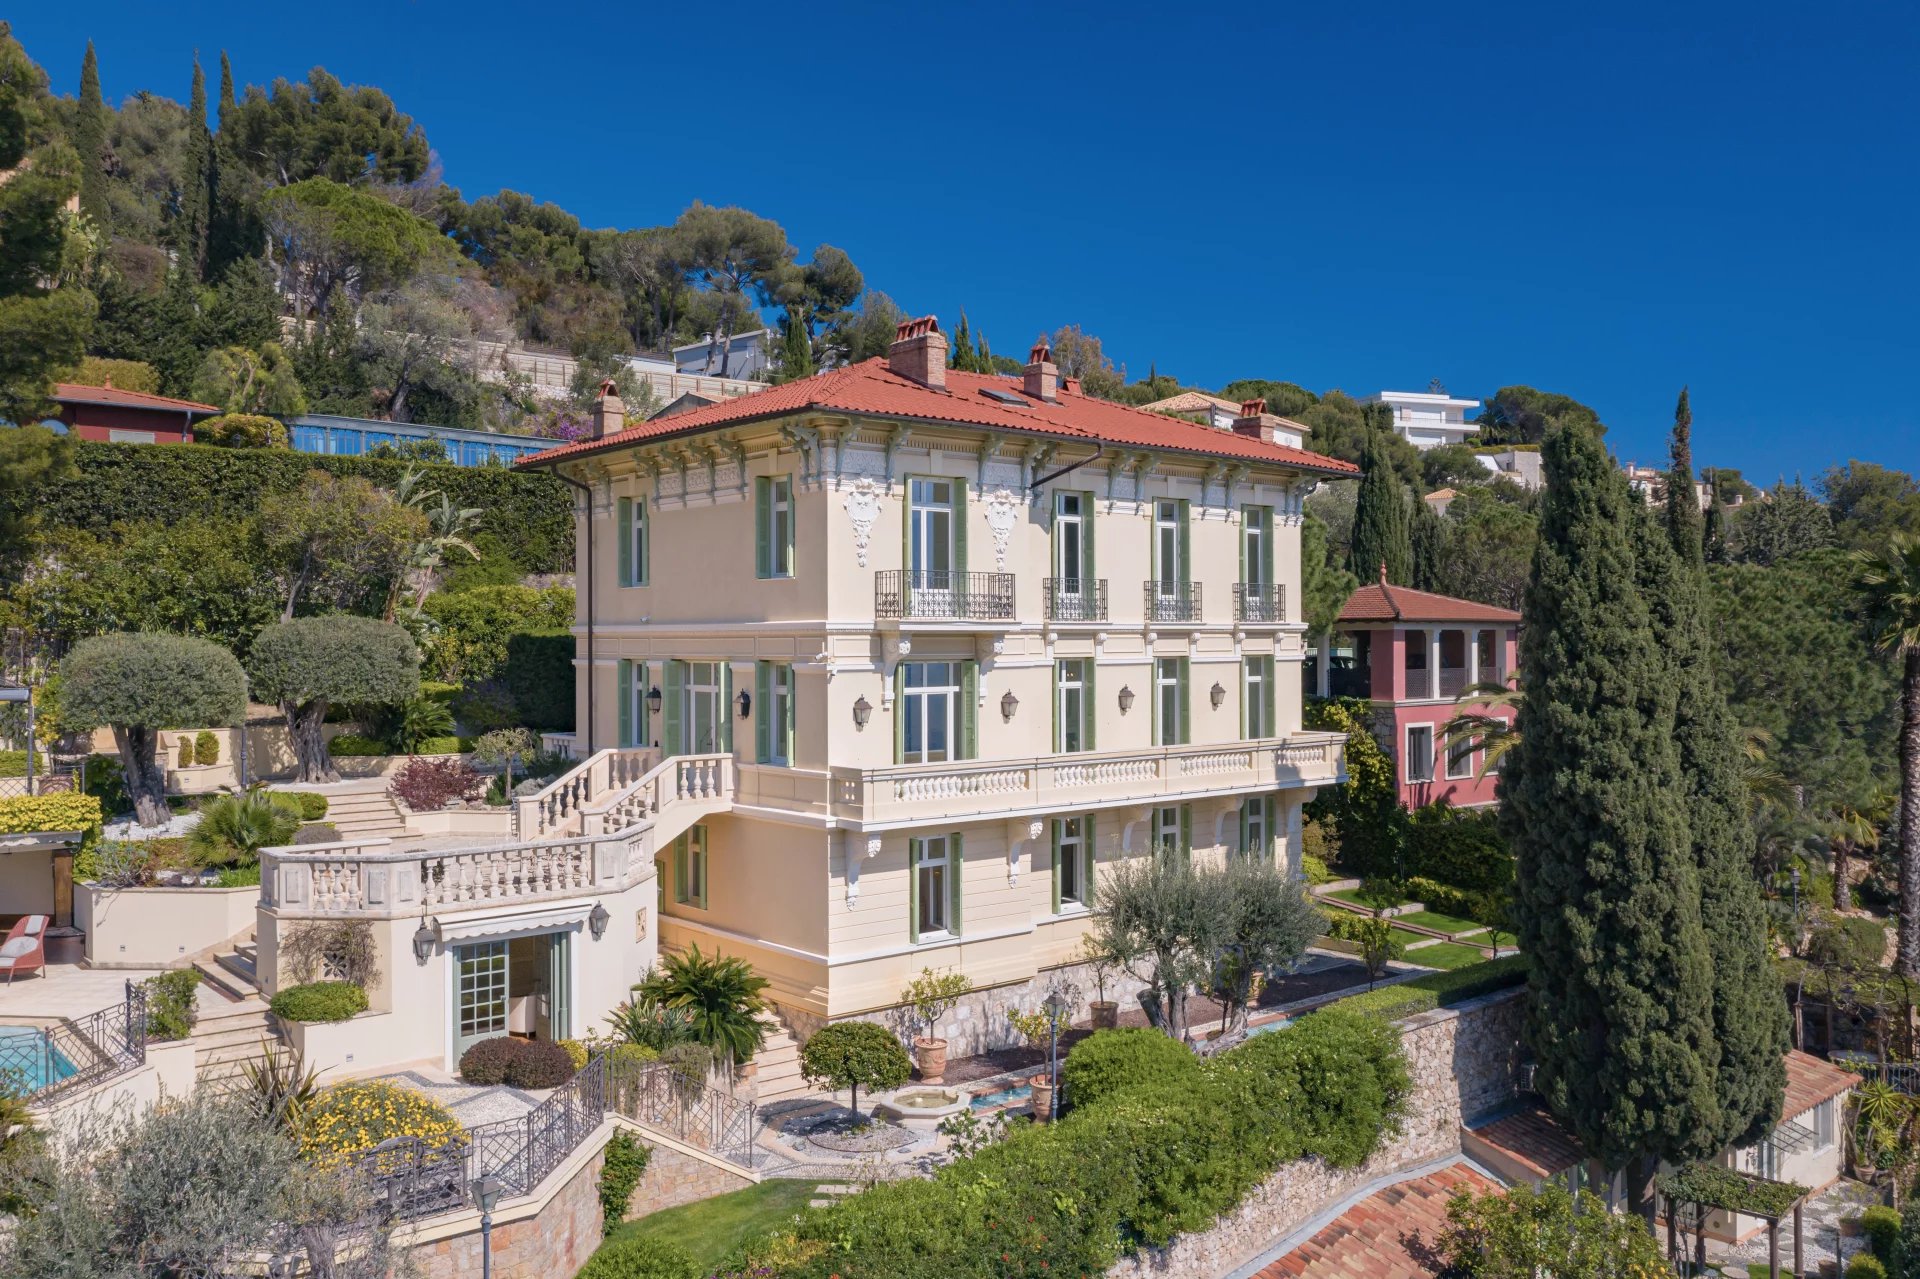 Roquebrune  Cap  Martin - Villa Belle Epoque panoramic sea view - Caretaker's house - Independent apartment - Swimming pool - spa - sports hall